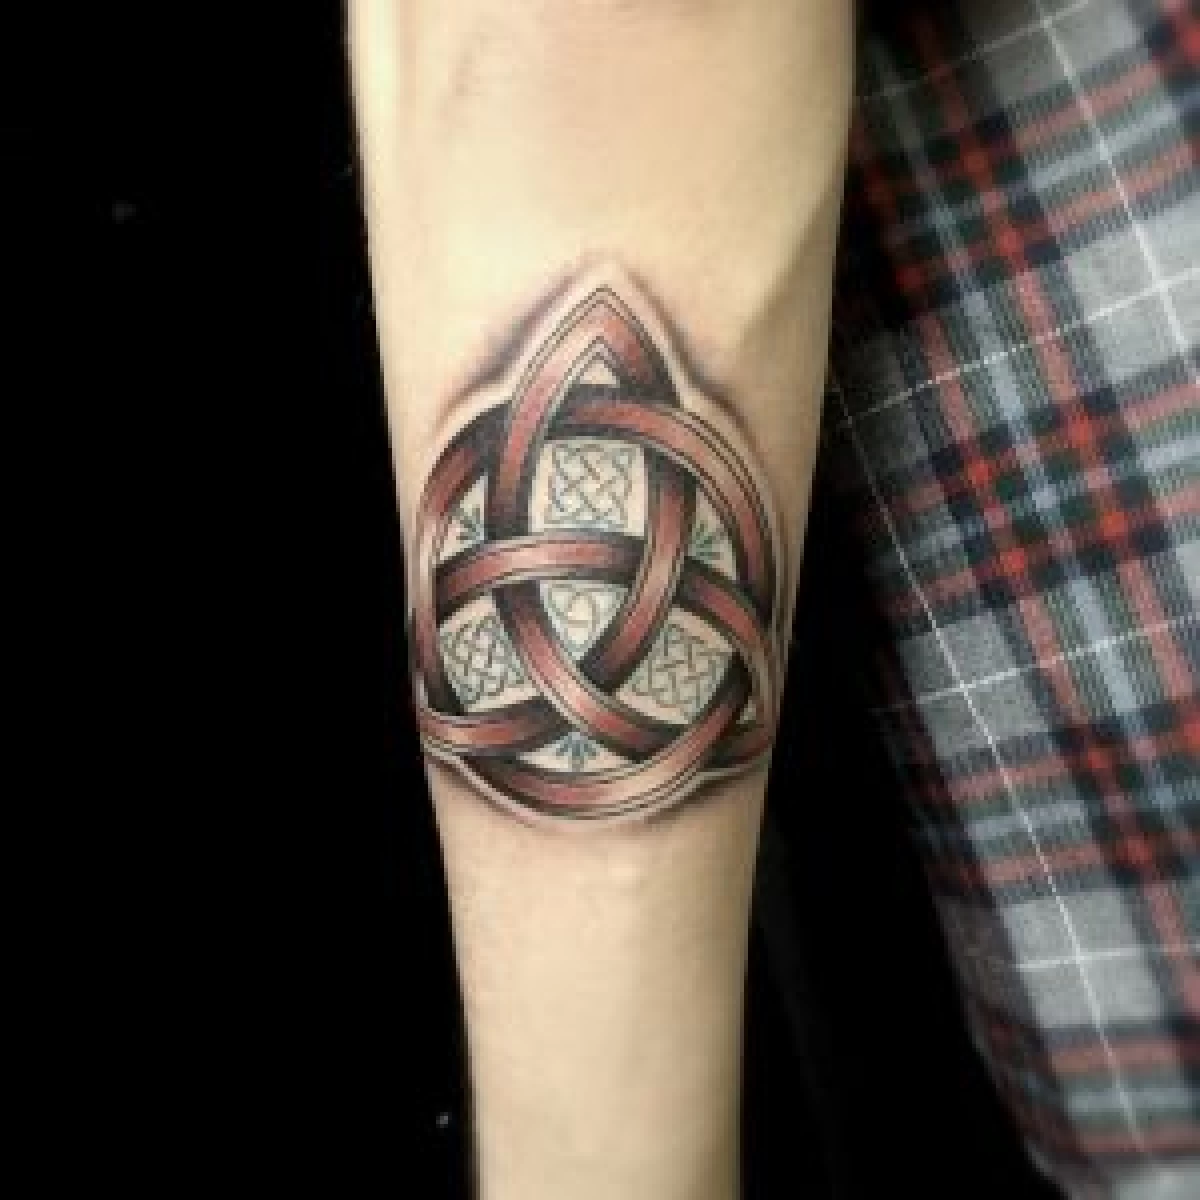 traditional celtic tattoos